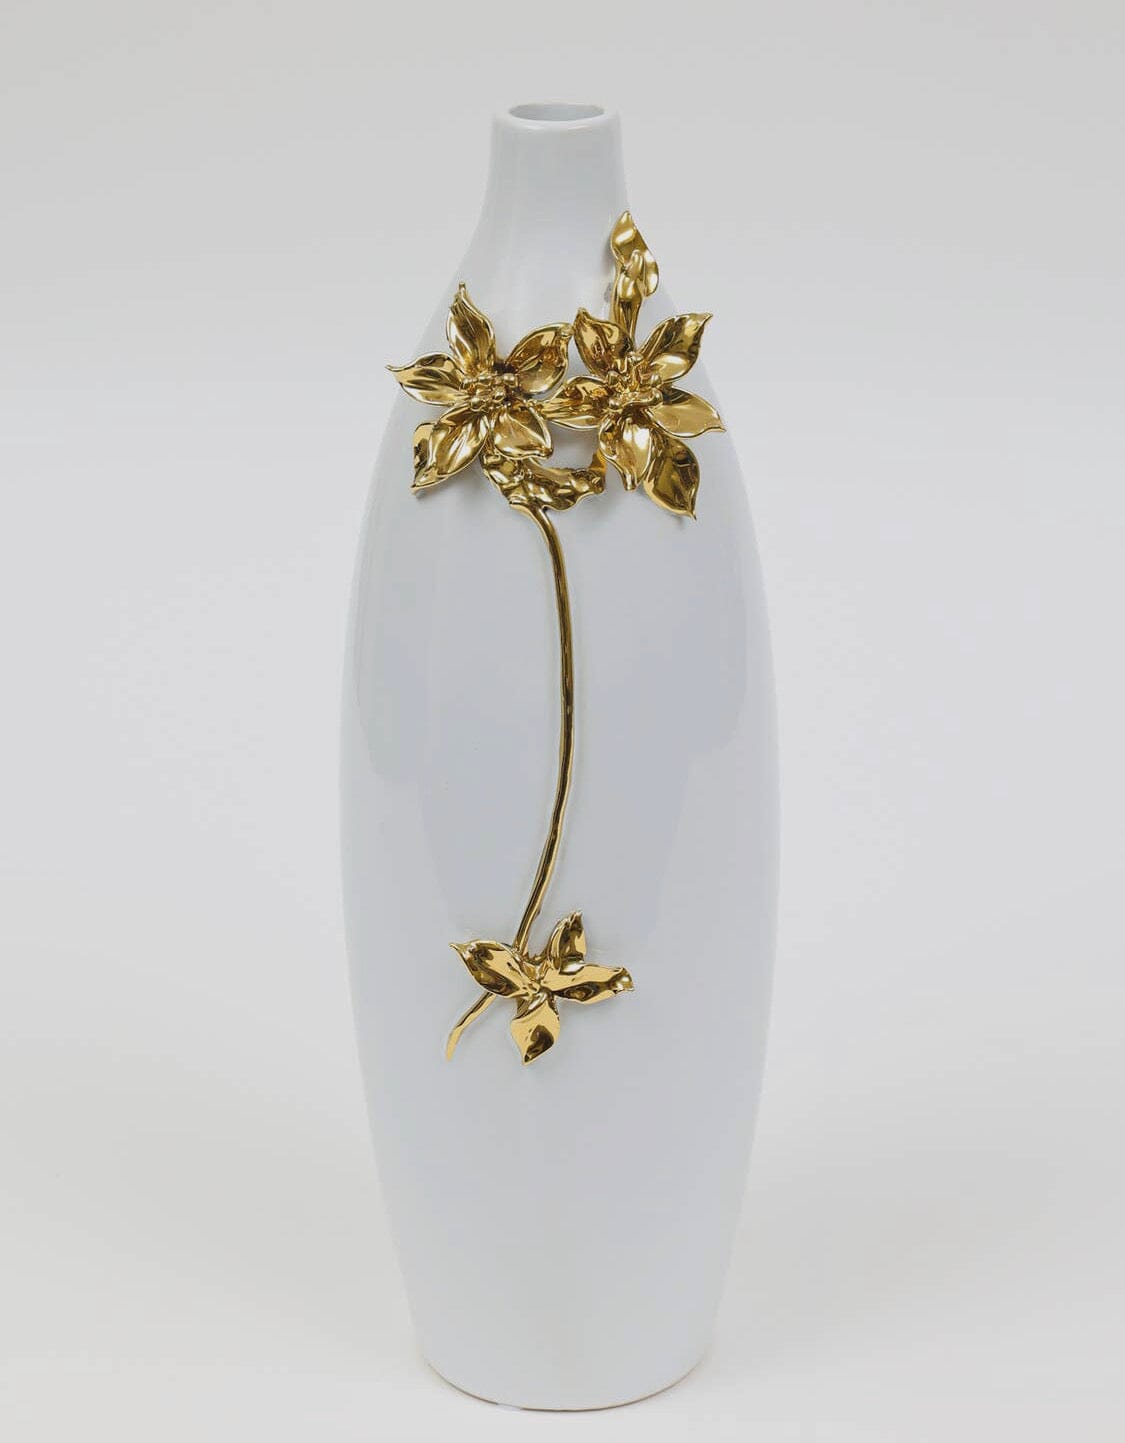 18" White Tall Vase Gold and White Flower Design Vases High Class Touch - Home Decor 